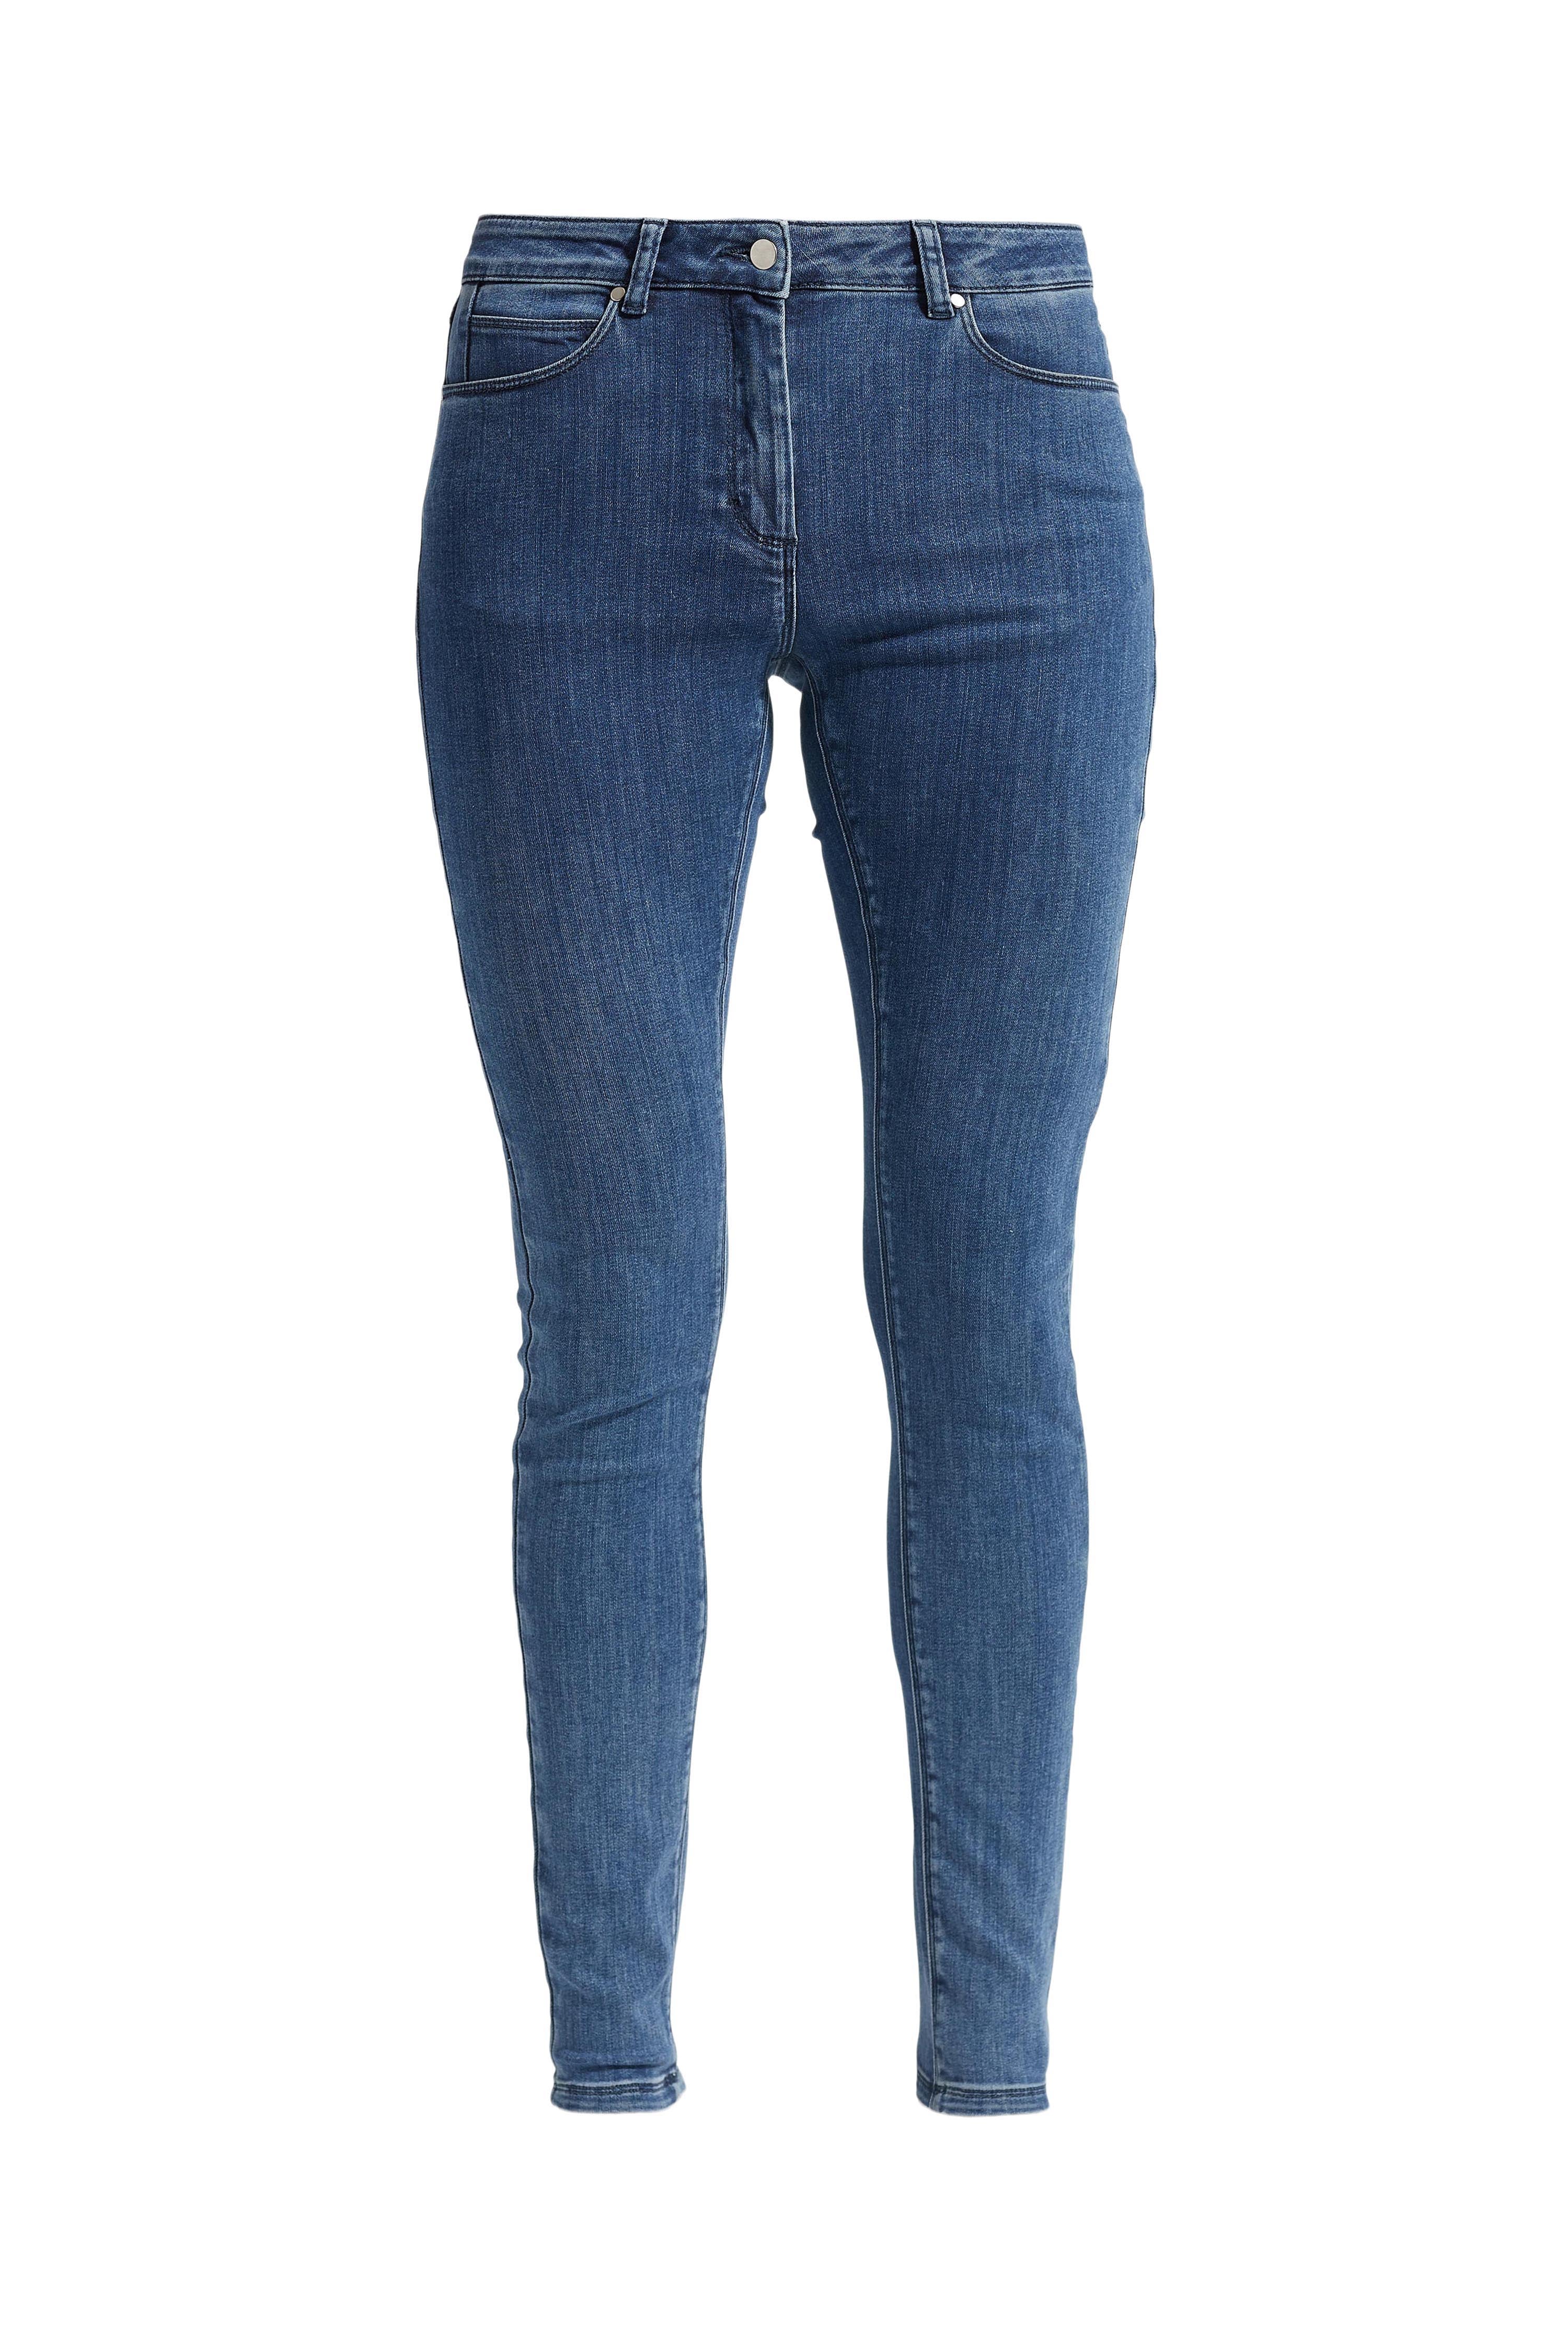 LAURIE Olivia Skinny - Medium Length Trousers SKINNY 45504 Medium Blue Denim